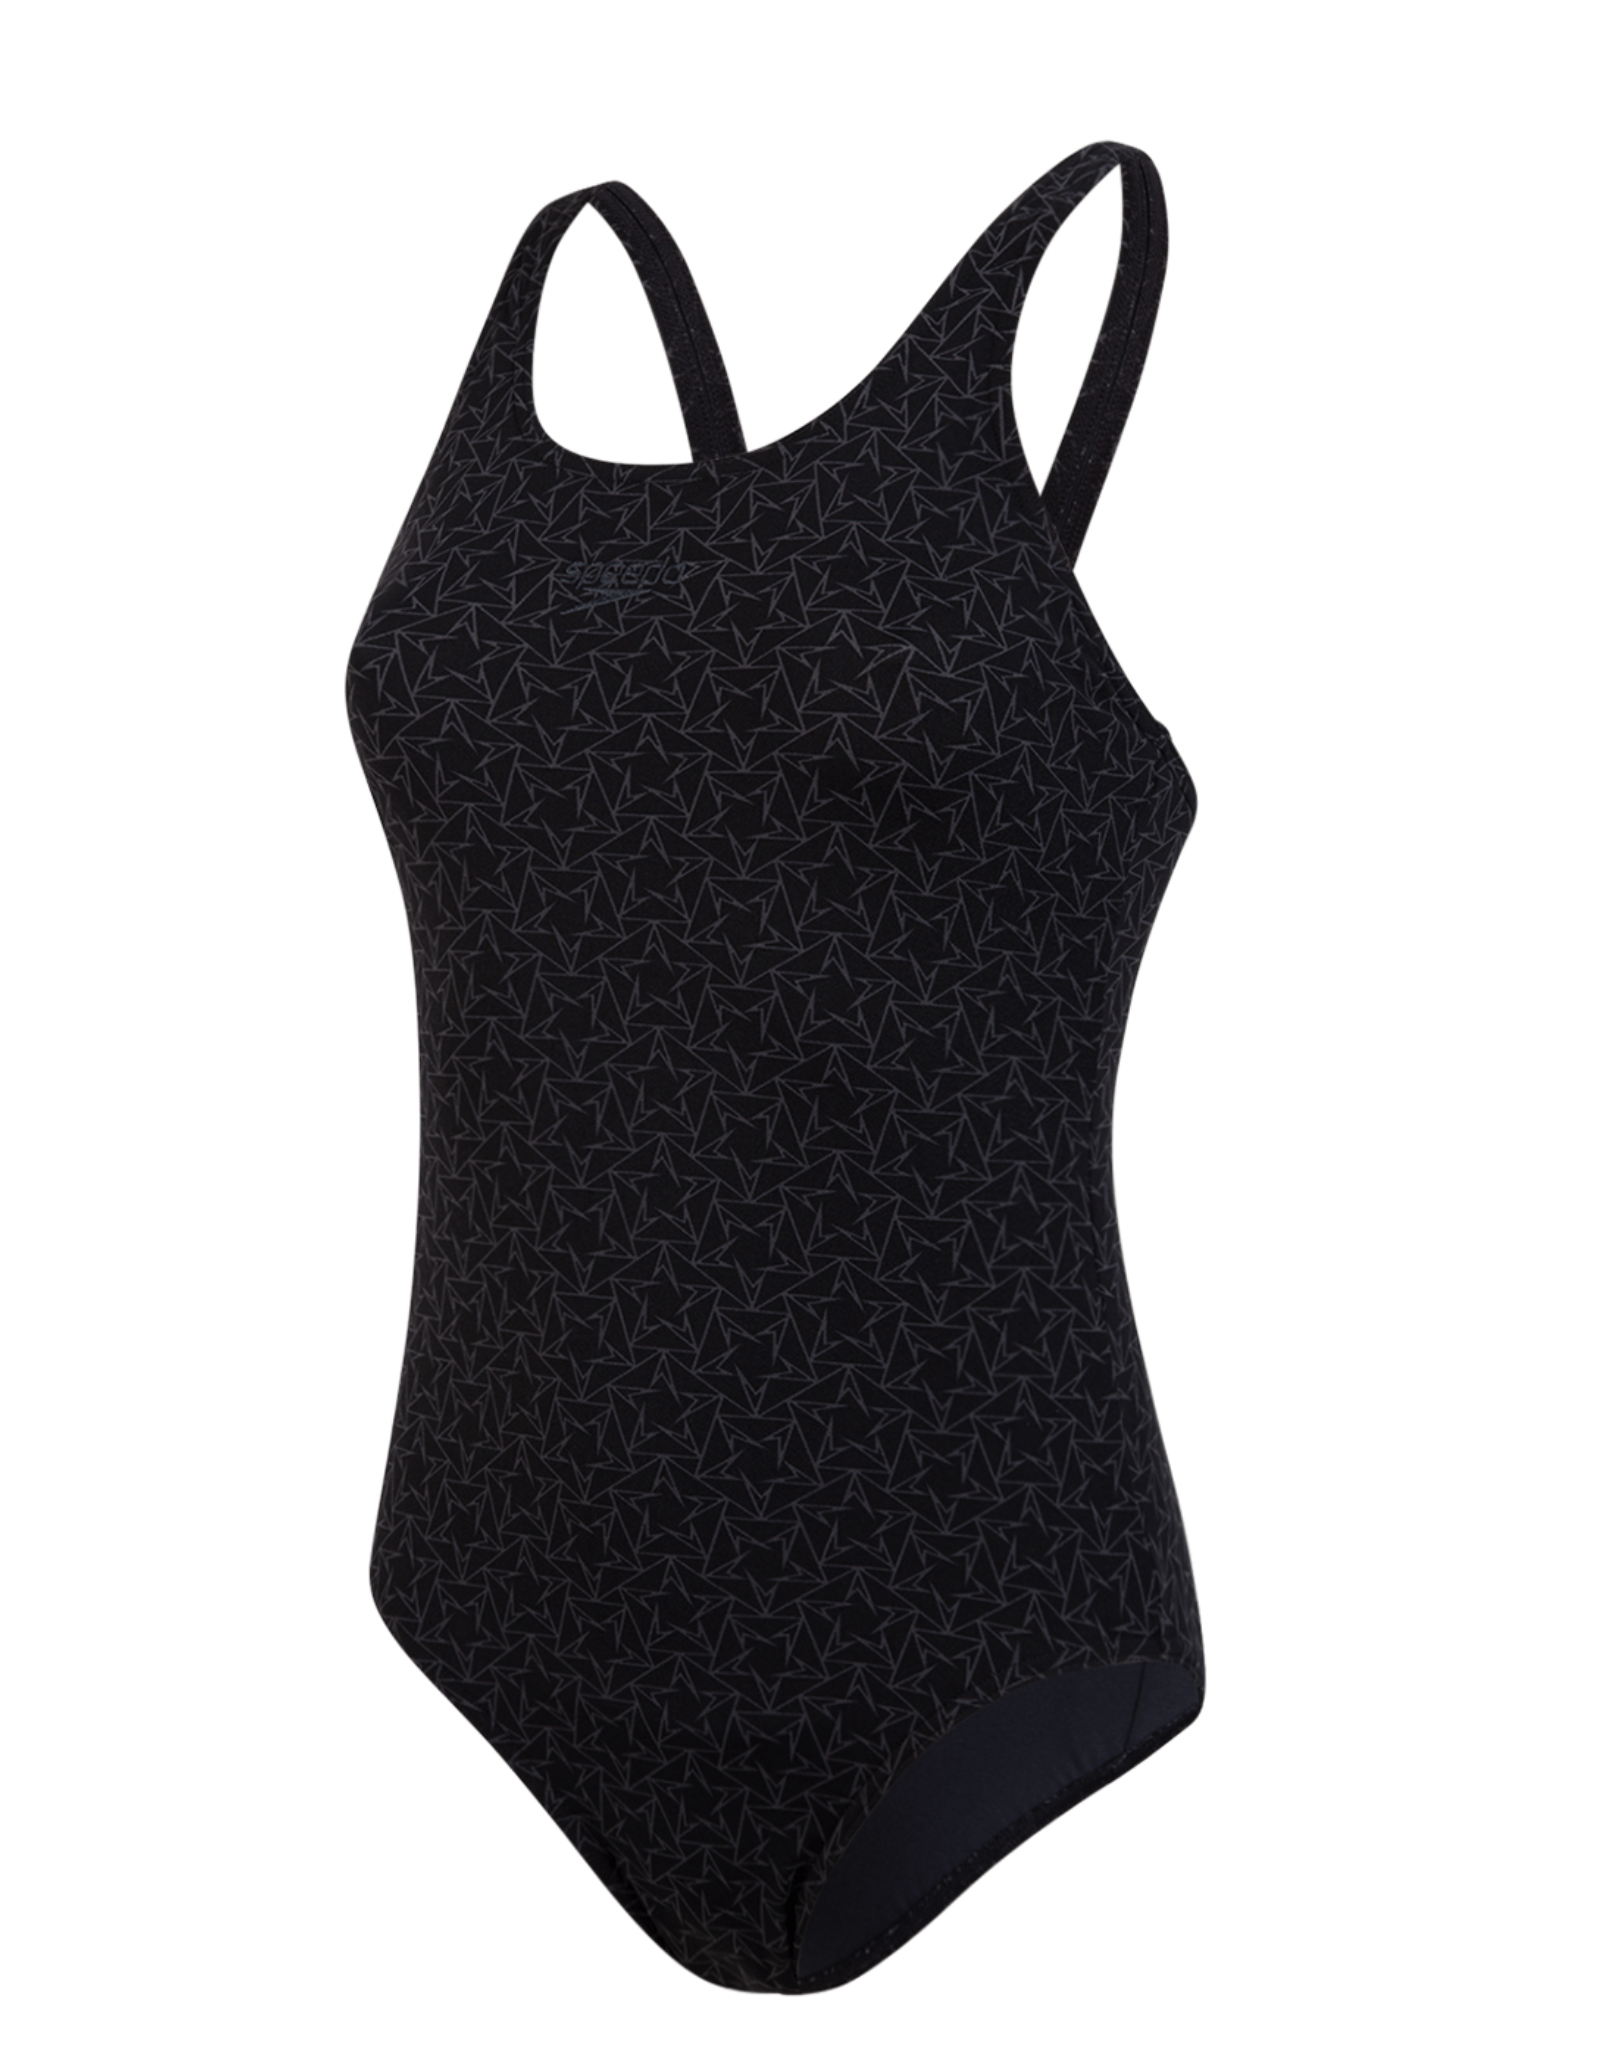 Speedo Boomstar Allover Muscleback Swimsuit - Black | Simply Swim ...